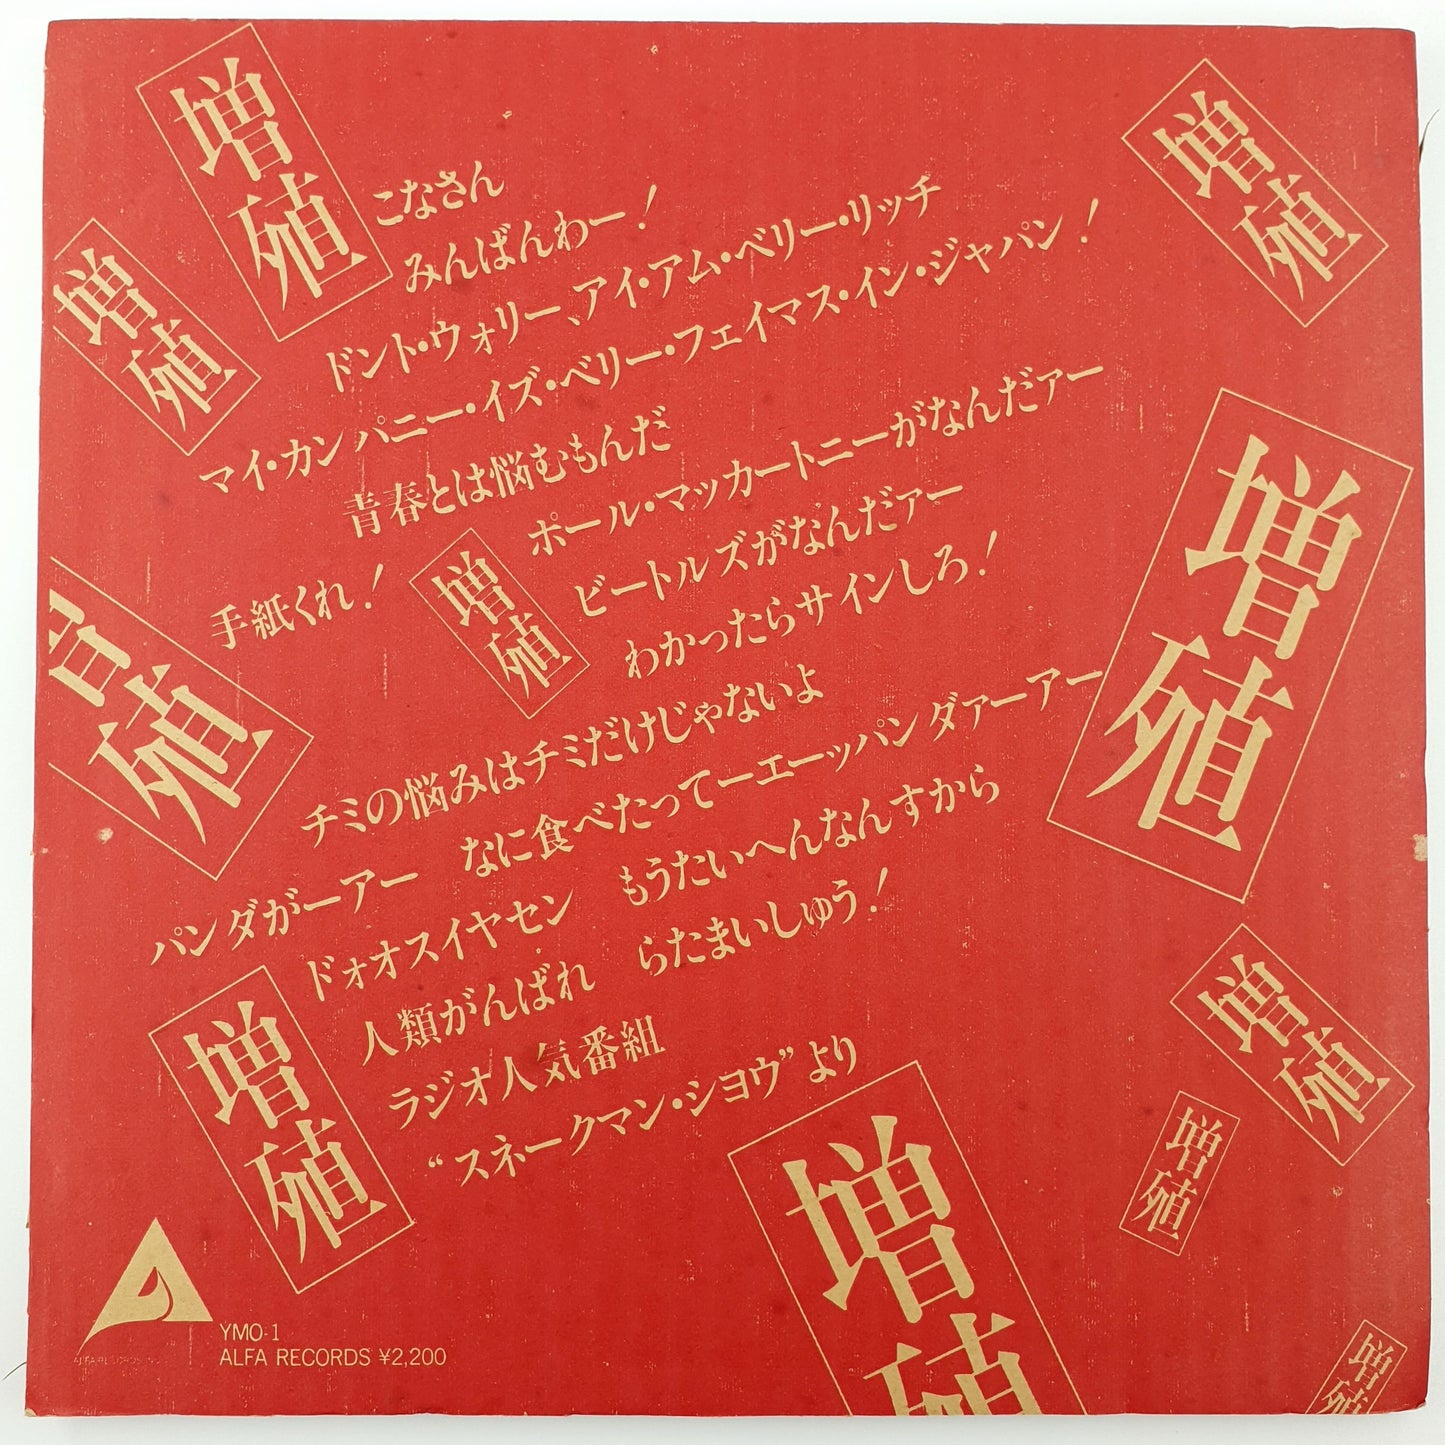 Yellow Magic Orchestra – X∞Multiplies (Mini Album, 10")